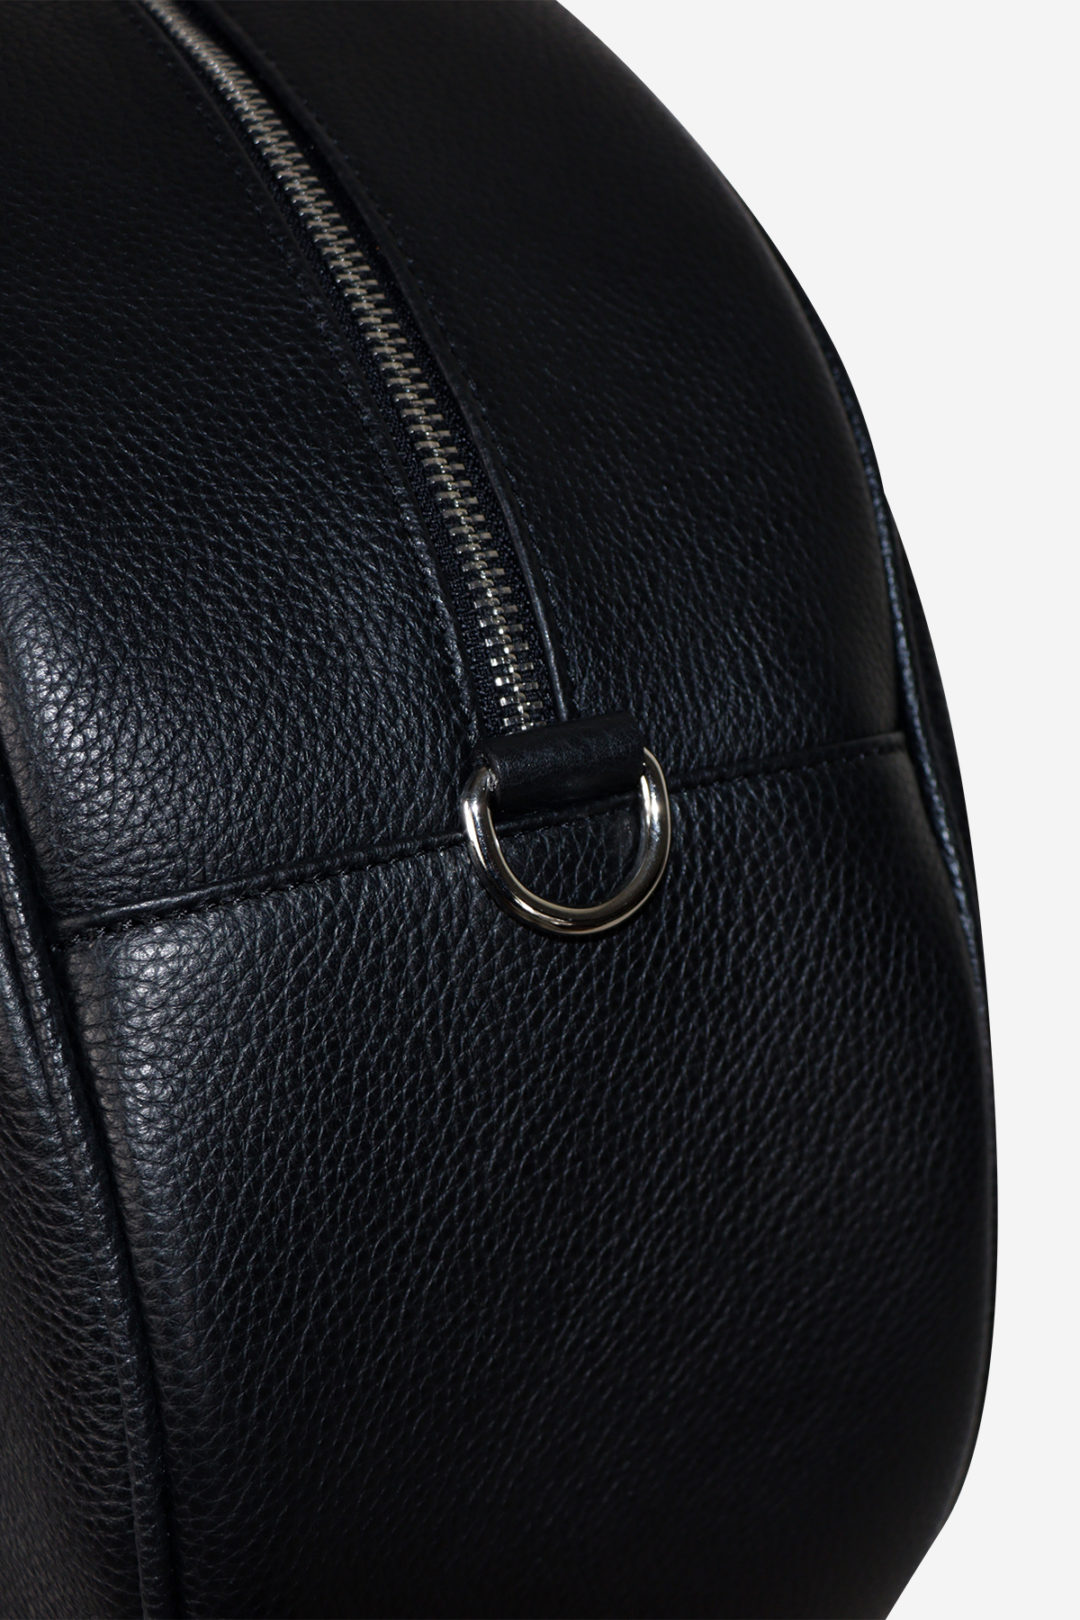 Details about   Vintage Mesace Leather Tennis Travel Bag 